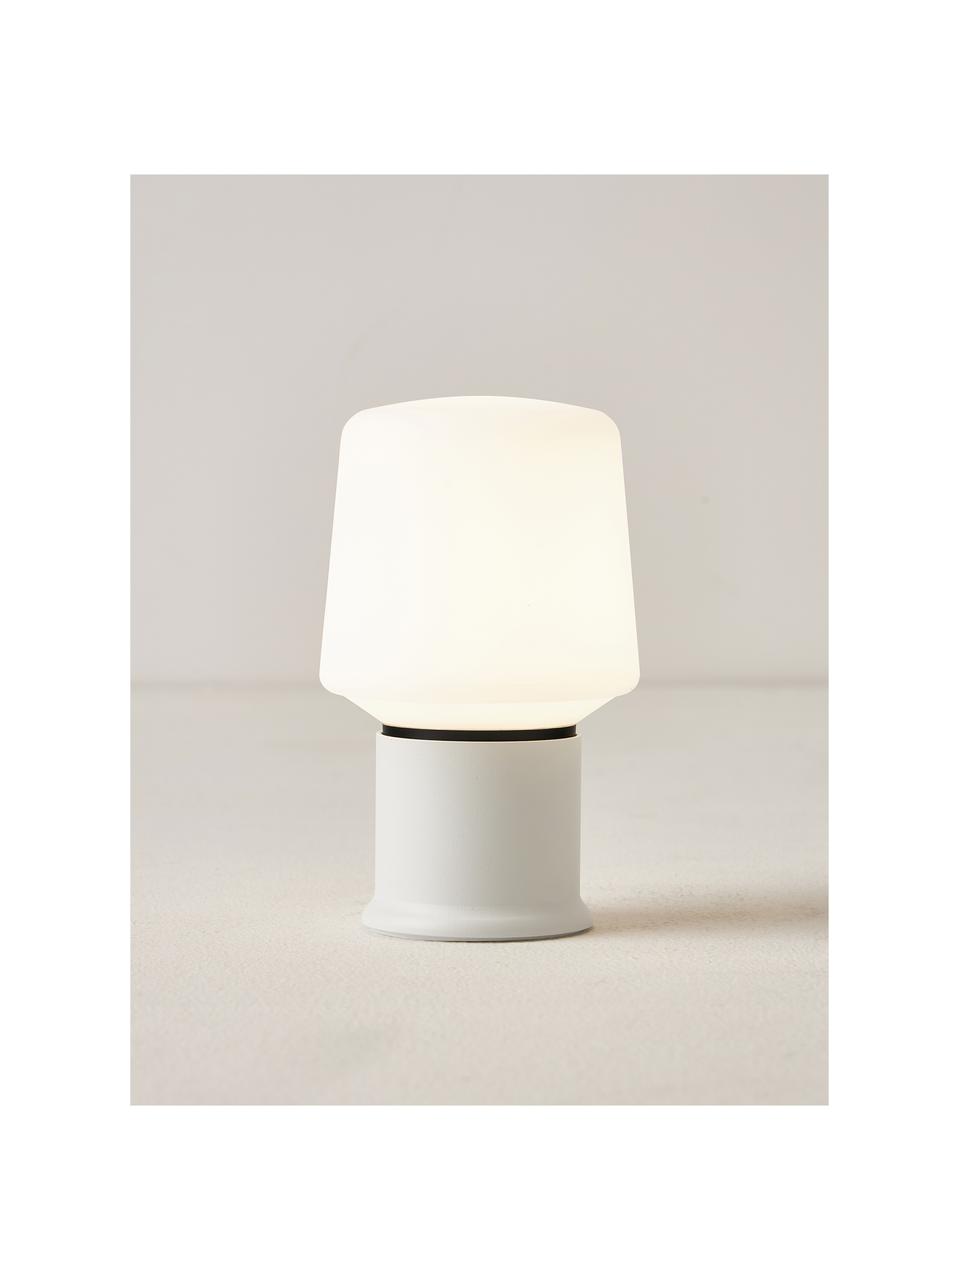 Mobile LED-Outdoor Tischlampe London, dimmbar, Kunststoff, Weiß, Ø 9 x H 15 cm